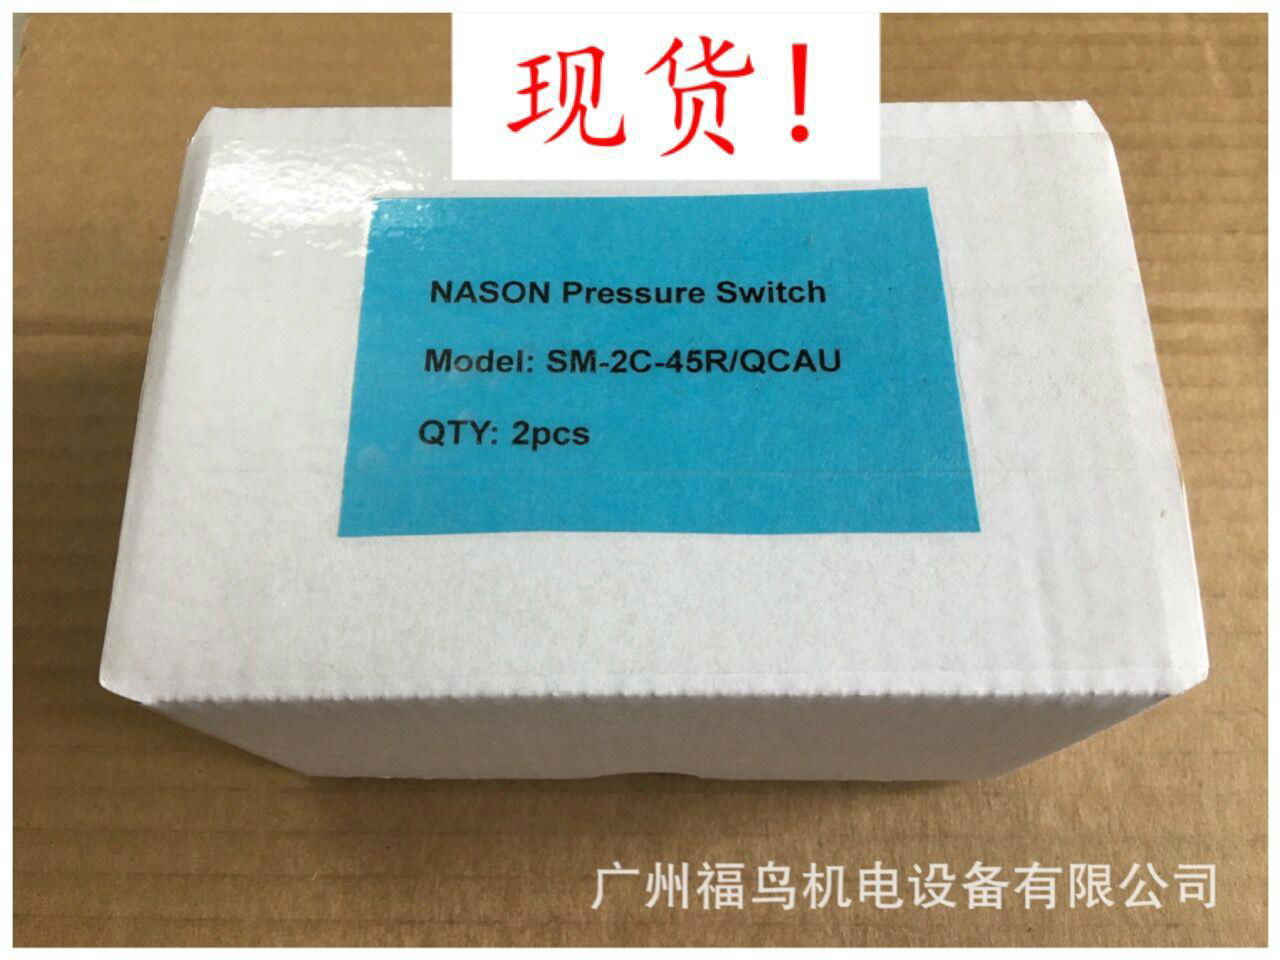 NASON壓力開關, 型號: SM-2C-45R/QCAU